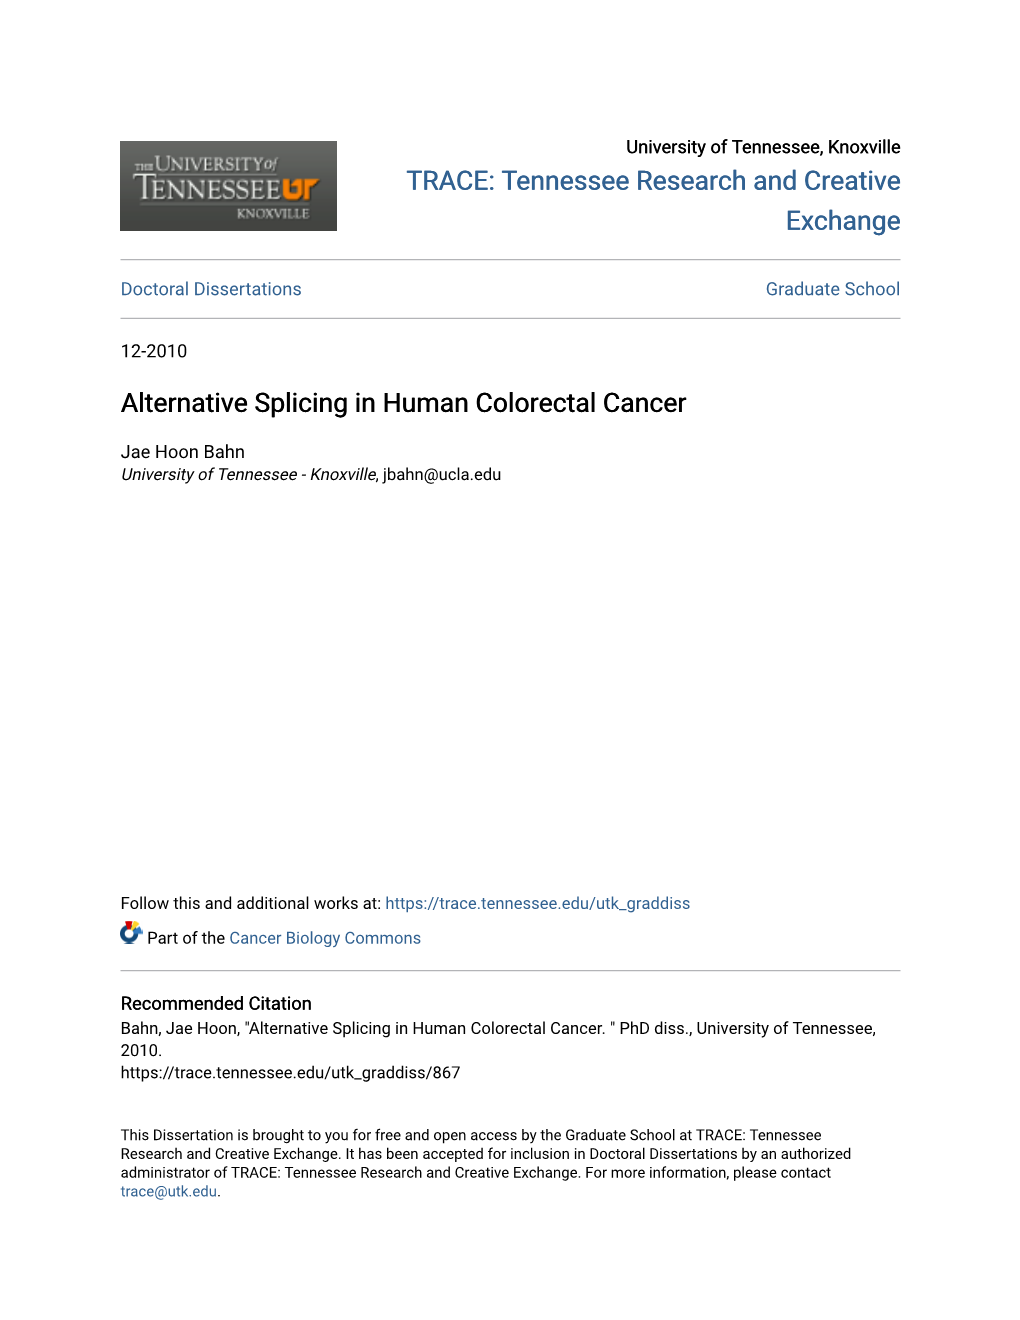 Alternative Splicing in Human Colorectal Cancer